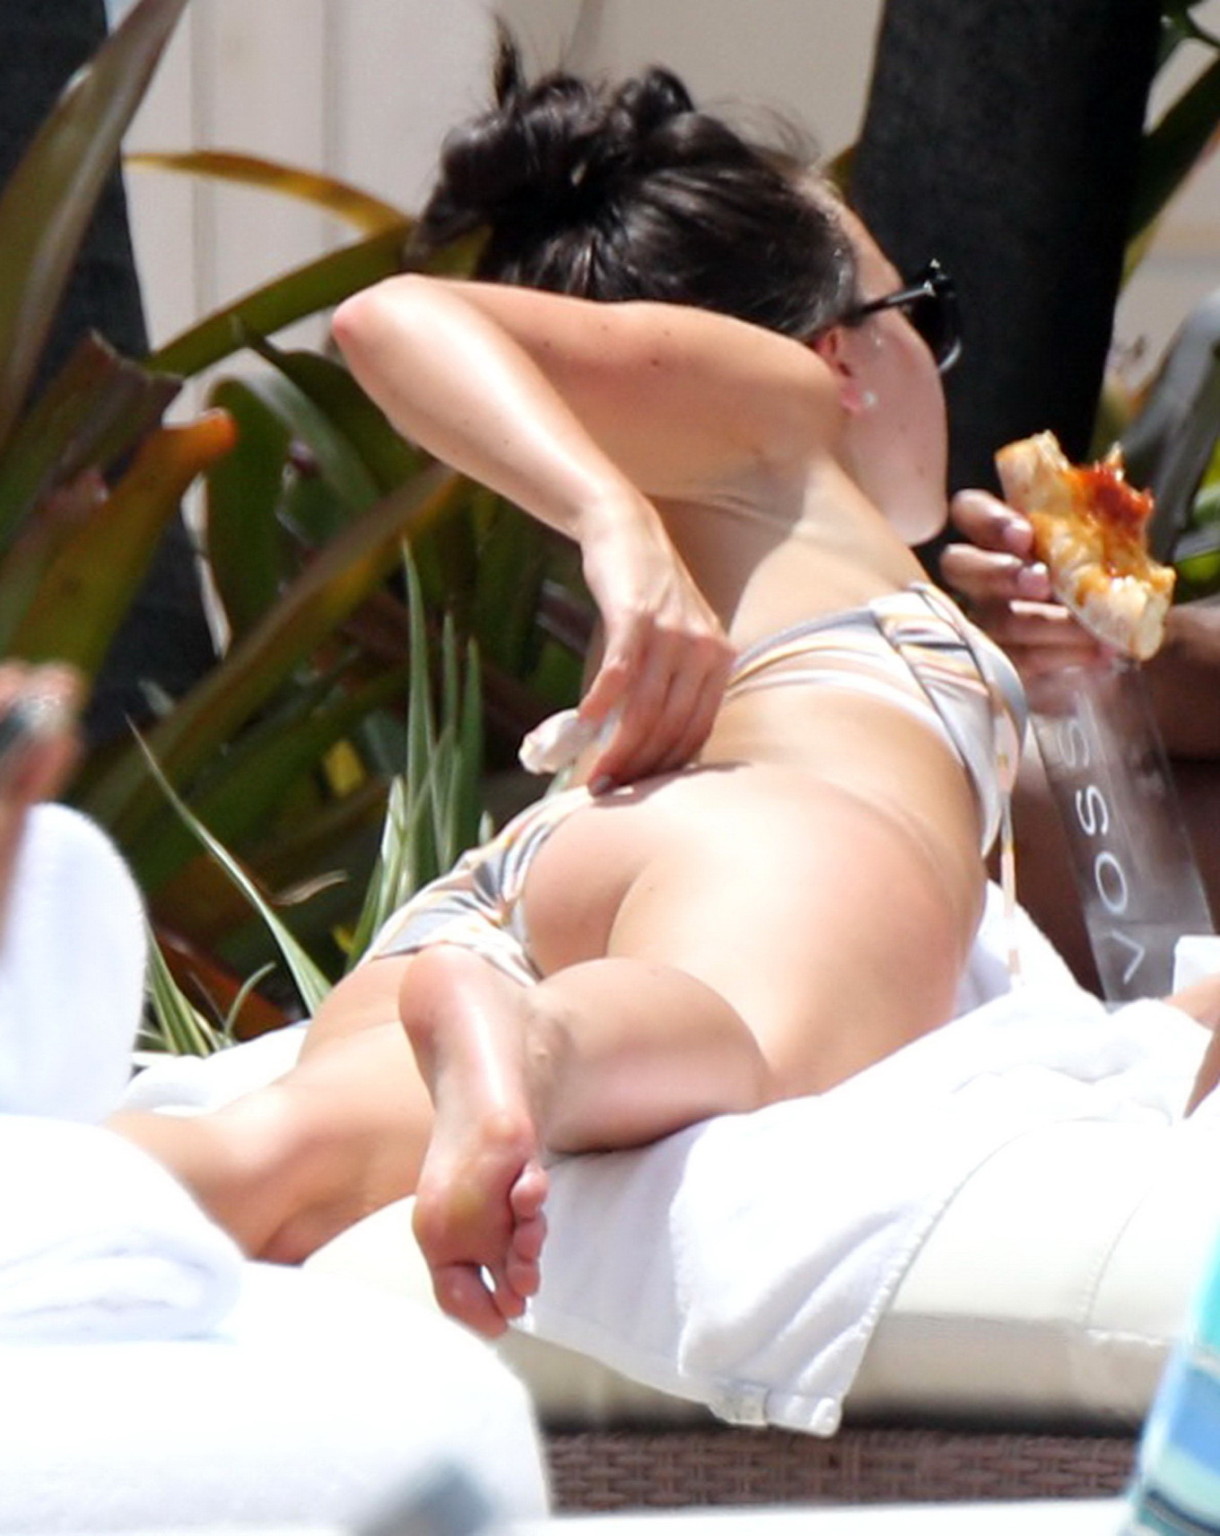 Louisa Lytton showing off her ass in bikini at the hotel pool in Miami #75229670